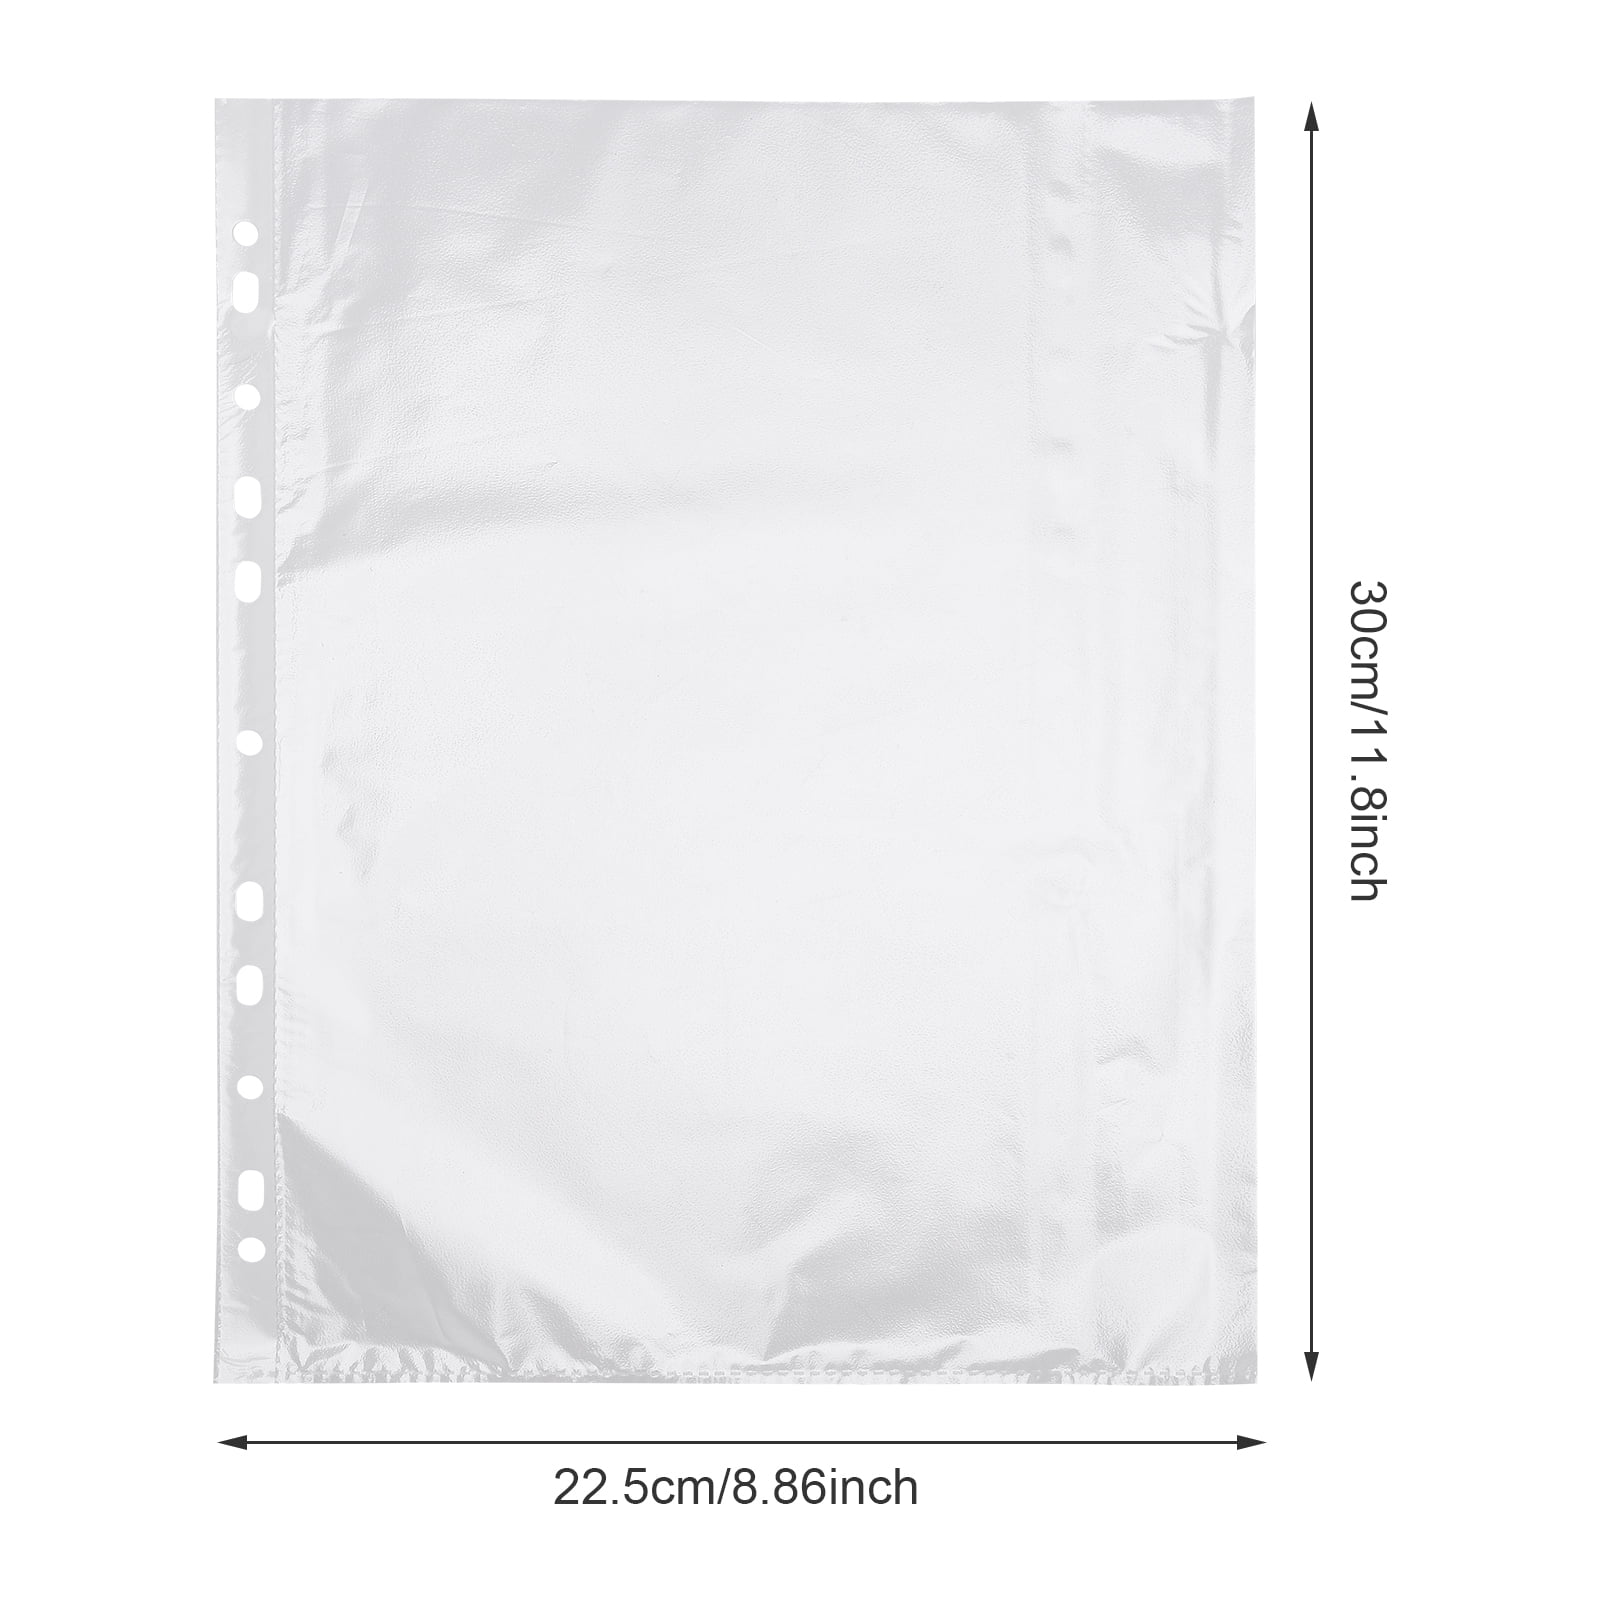 Generic 10pcs A4 Clear Bag Plastic Document Wallet Files Folders @ Best  Price Online